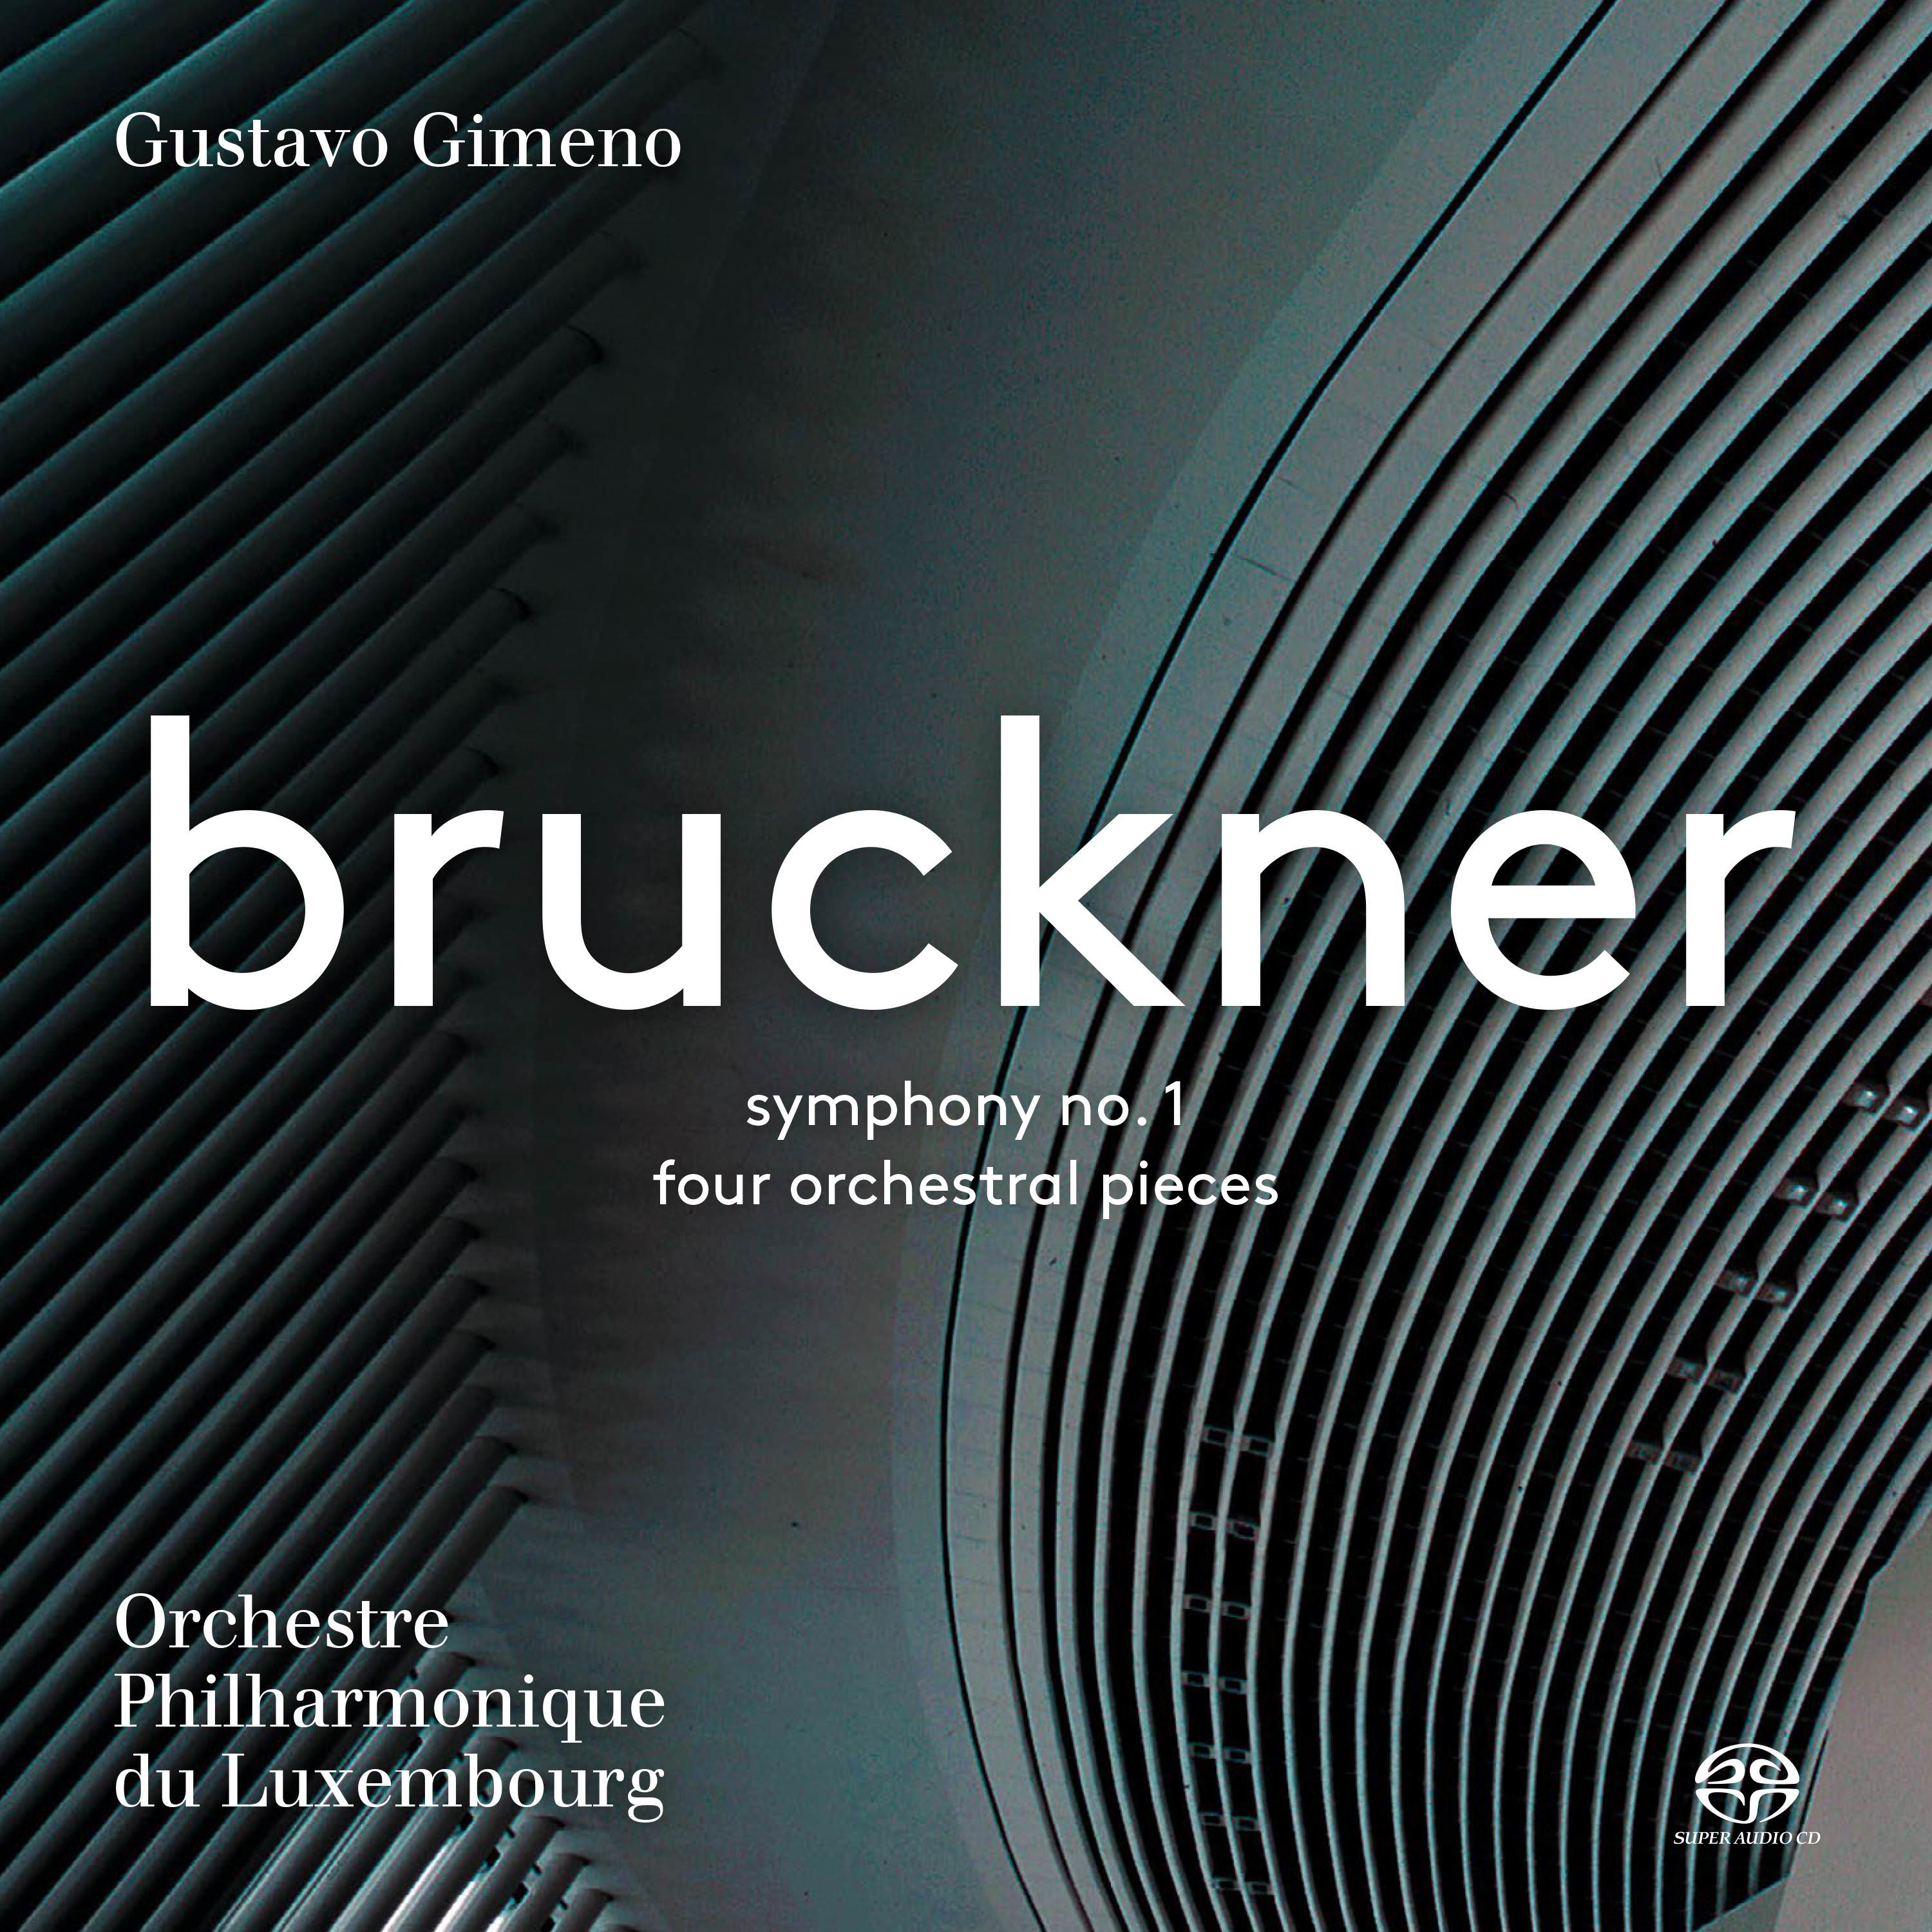 Orchestre Philharmonique du Luxembourg, Gustavo Gimeno – Bruckner: Symphony No. 1 (2017) DSF DSD64